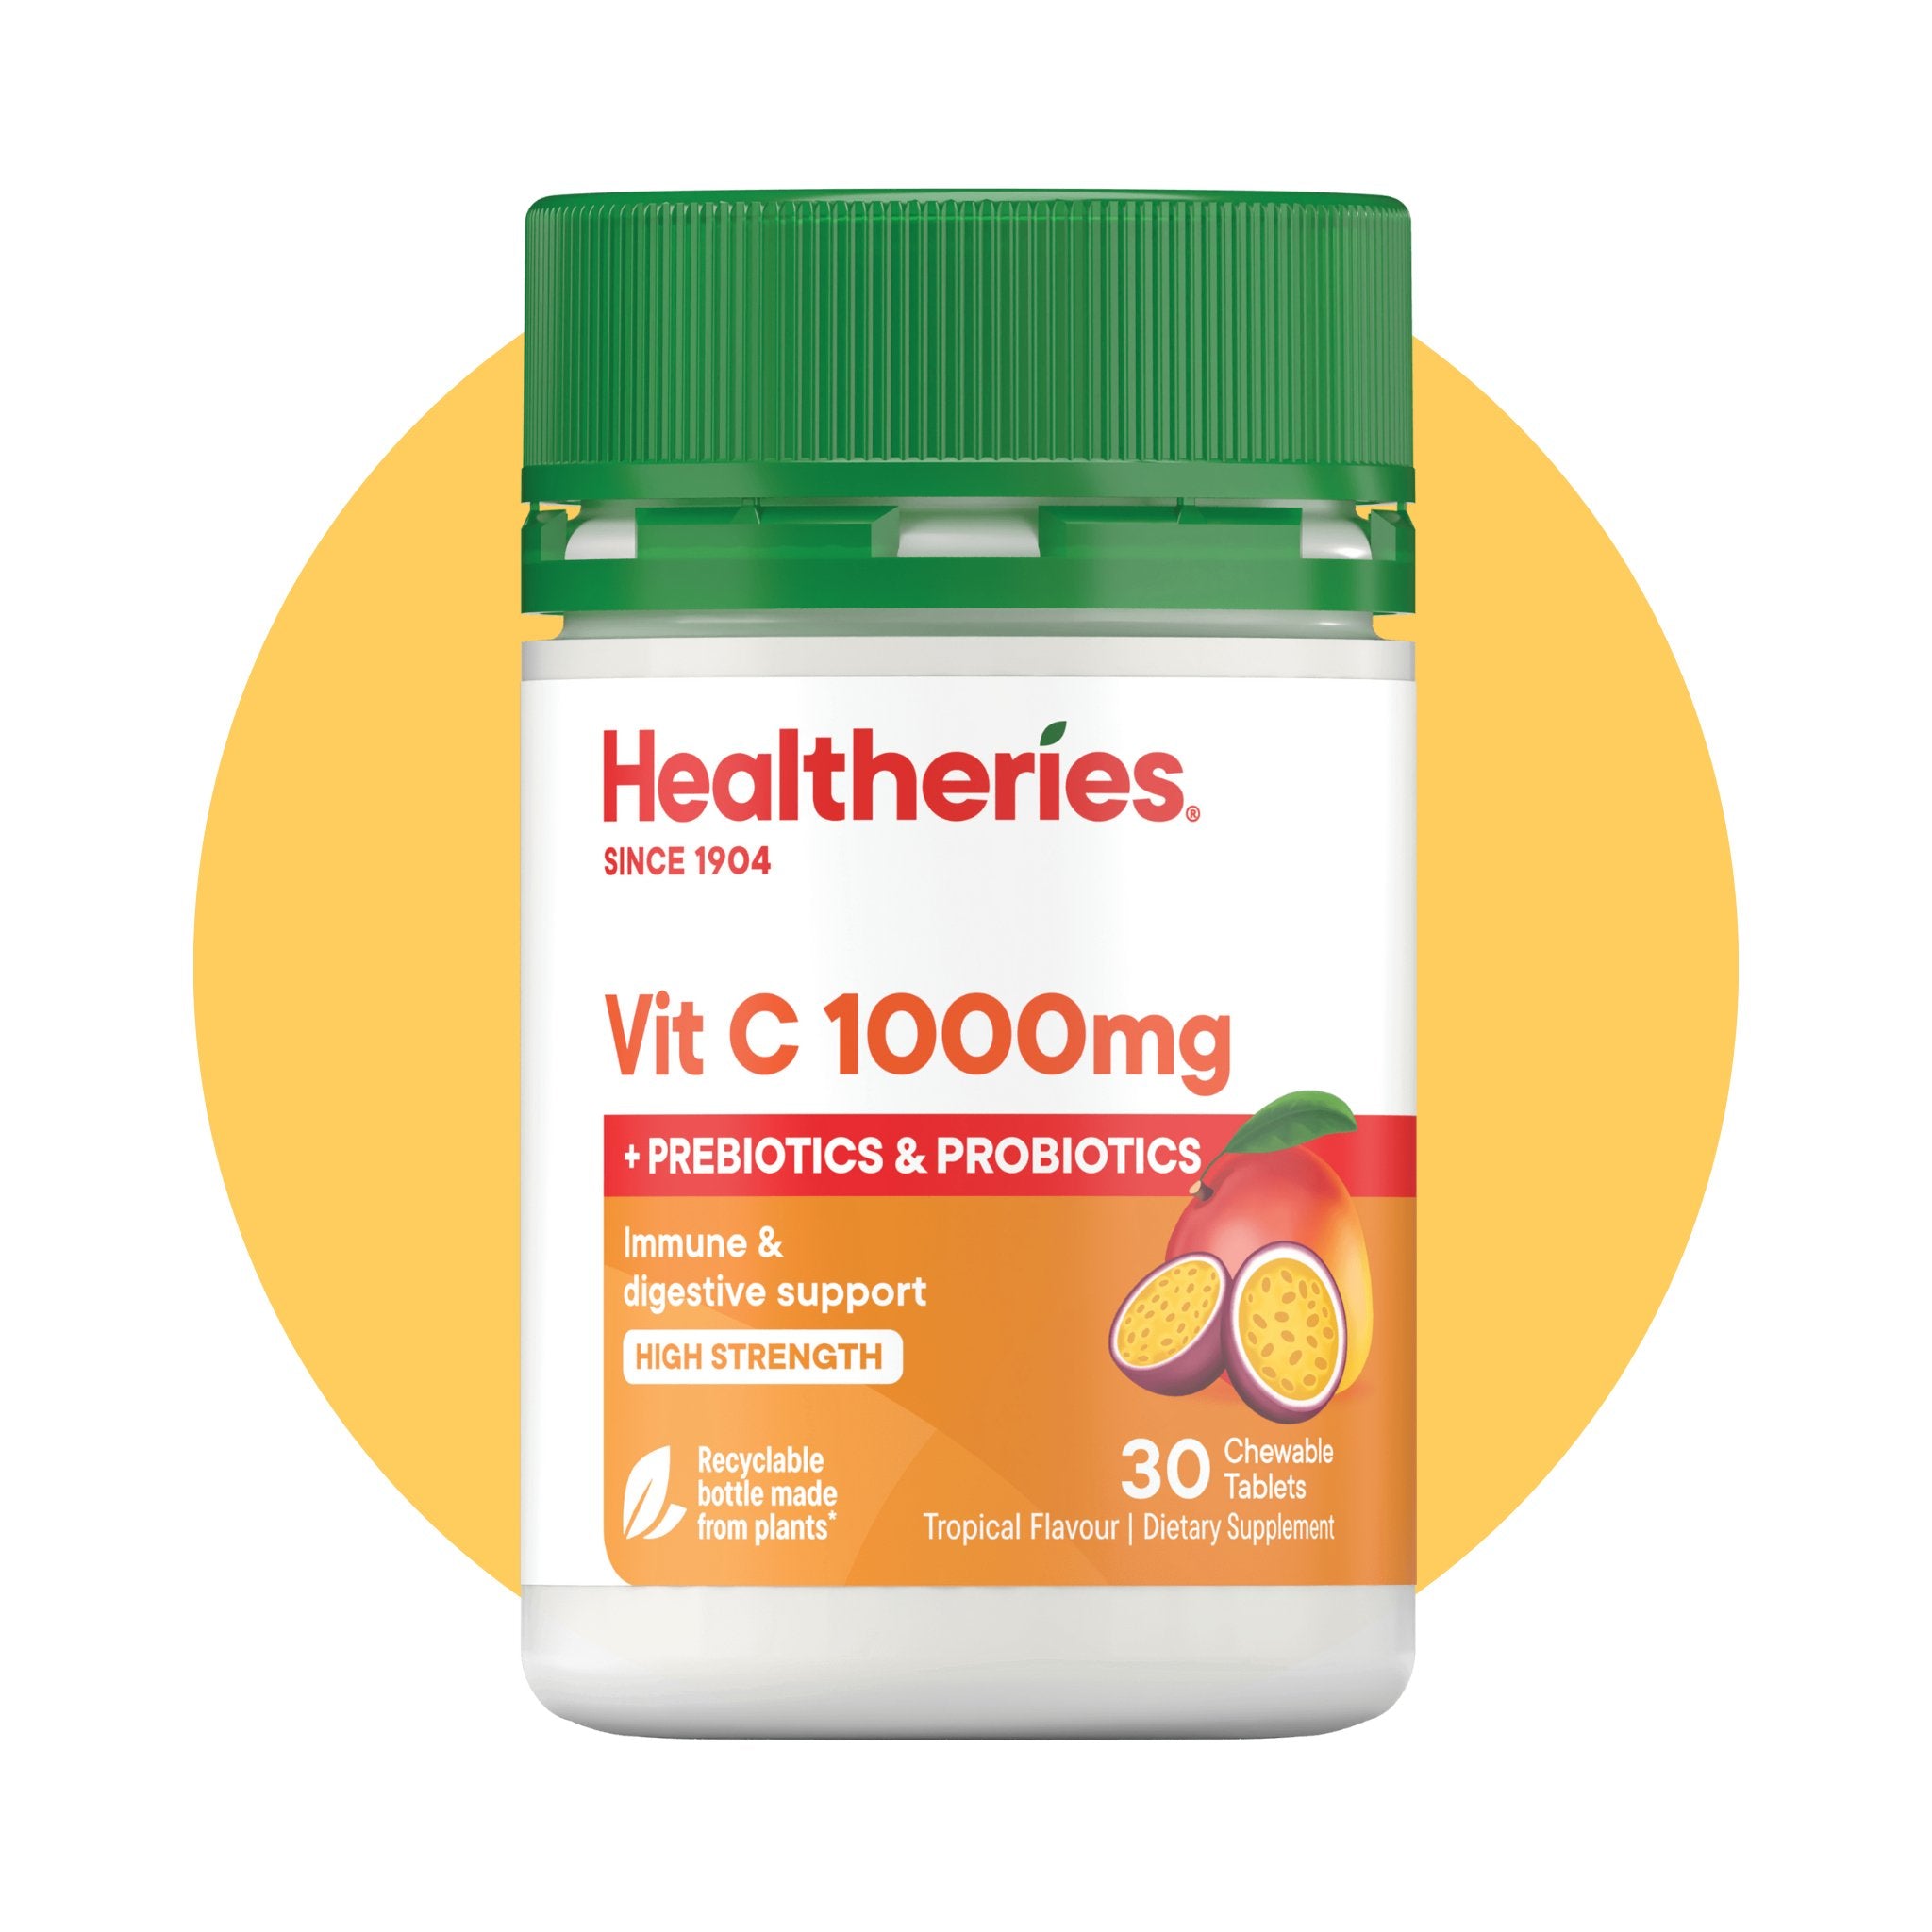 Healtheries Vit C 1000mg With Prebiotics & Probiotics 30s - Healtheries Hong Kong